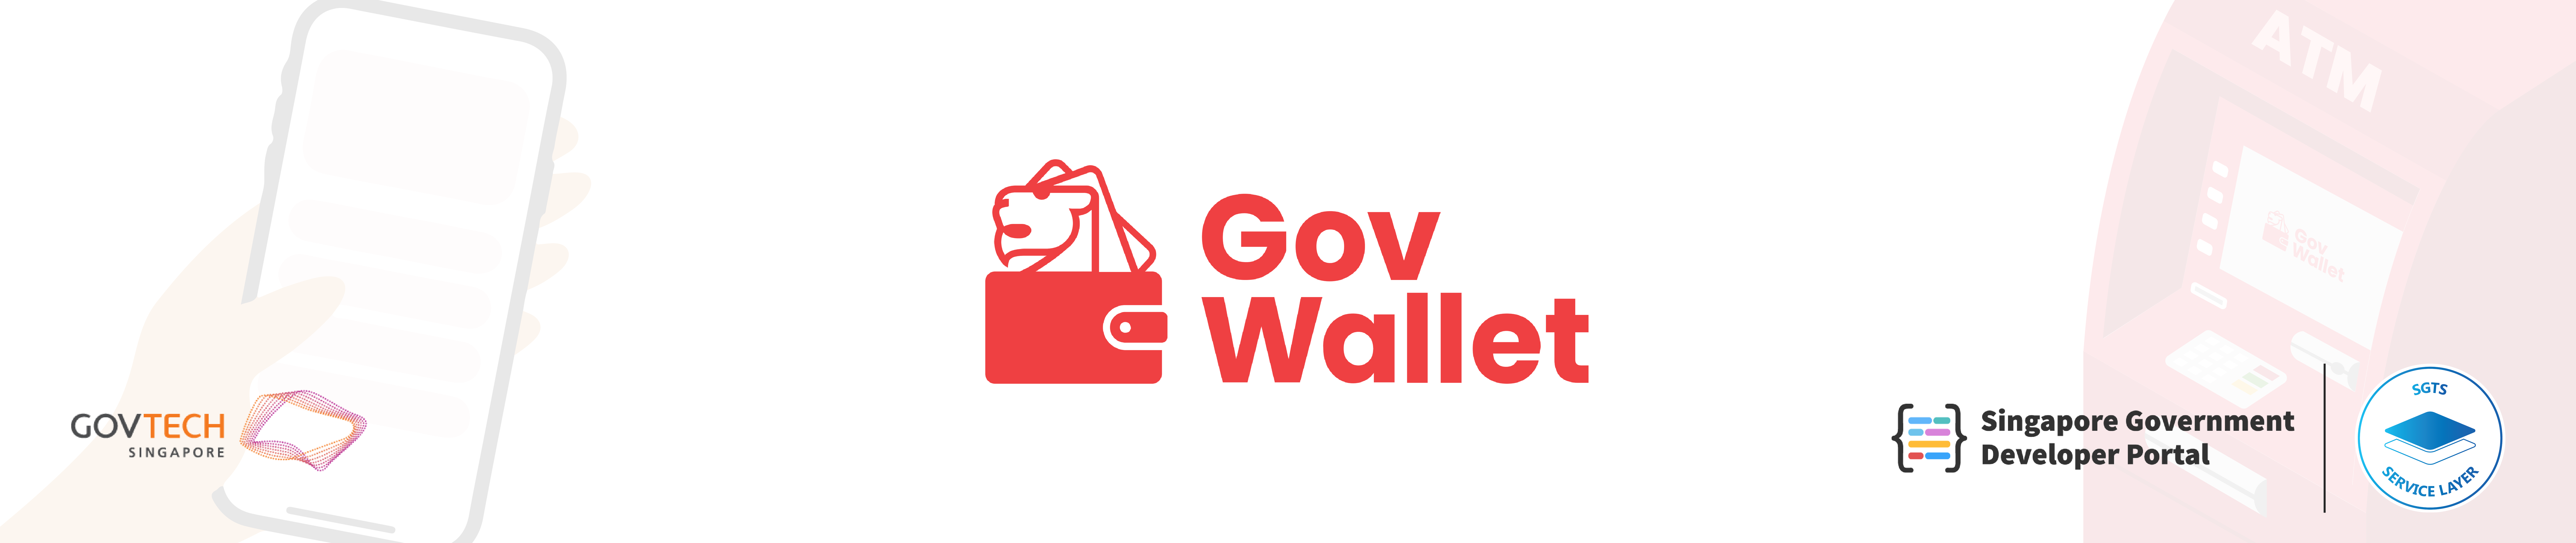 GovWallet header banner for Singapore Government Developer Portal